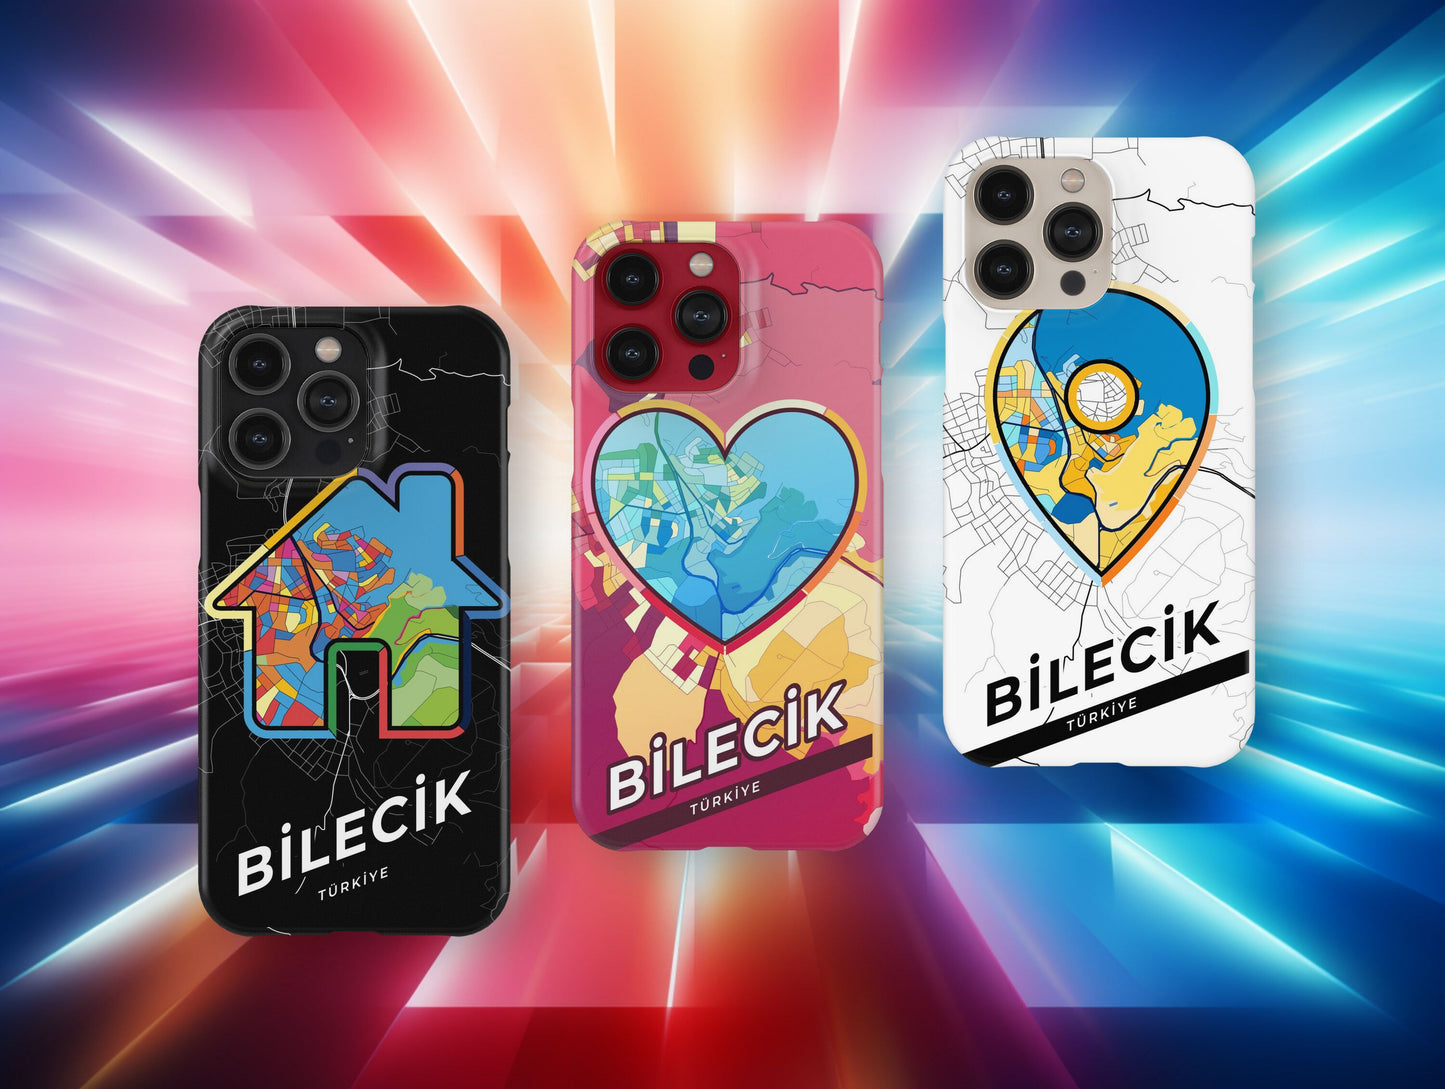 Bilecik Turkey slim phone case with colorful icon. Birthday, wedding or housewarming gift. Couple match cases.